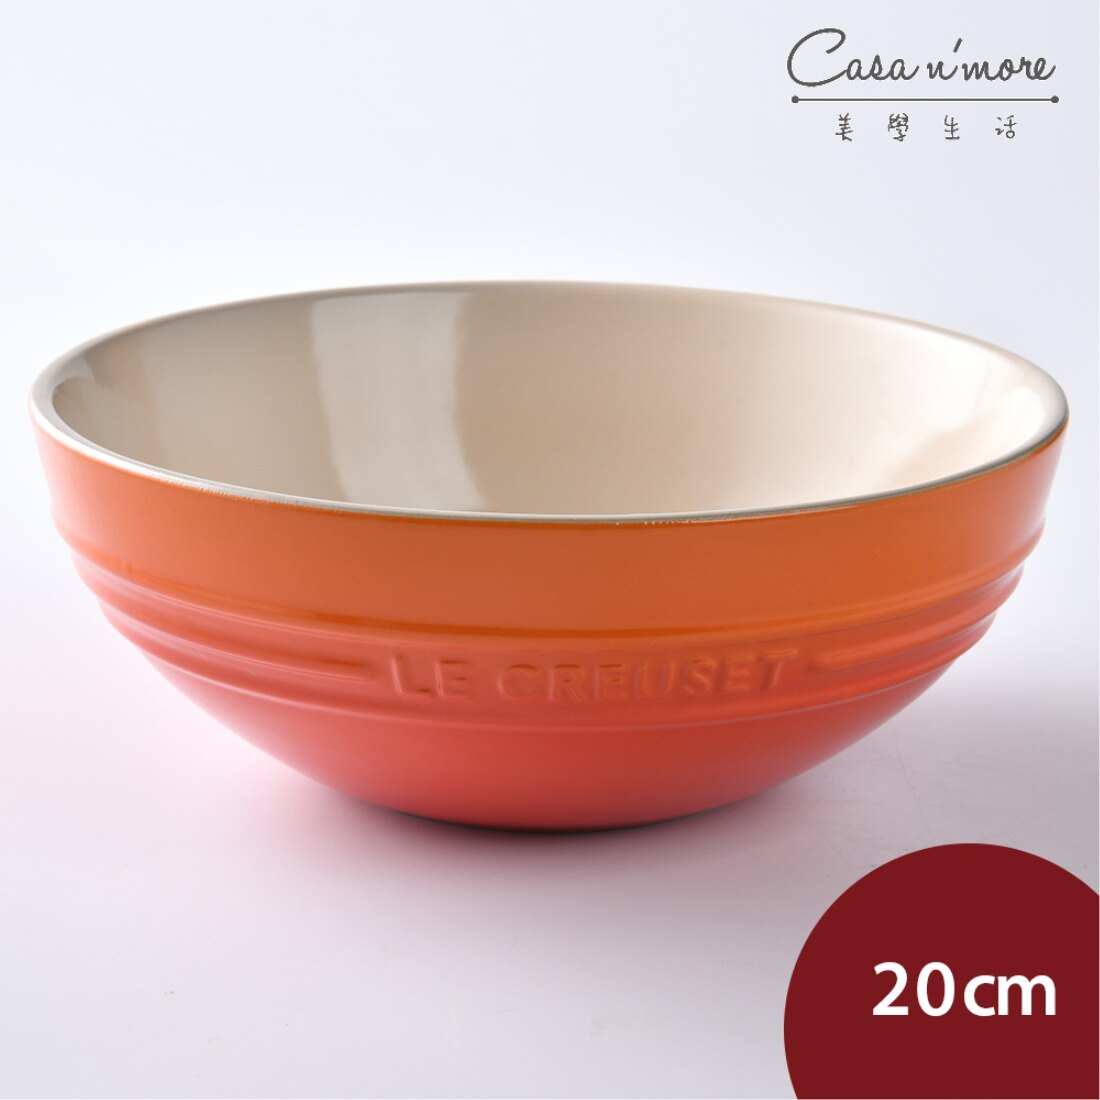 Le Creuset 陶瓷沙拉碗 麥片碗 料理碗 20cm 火焰橘